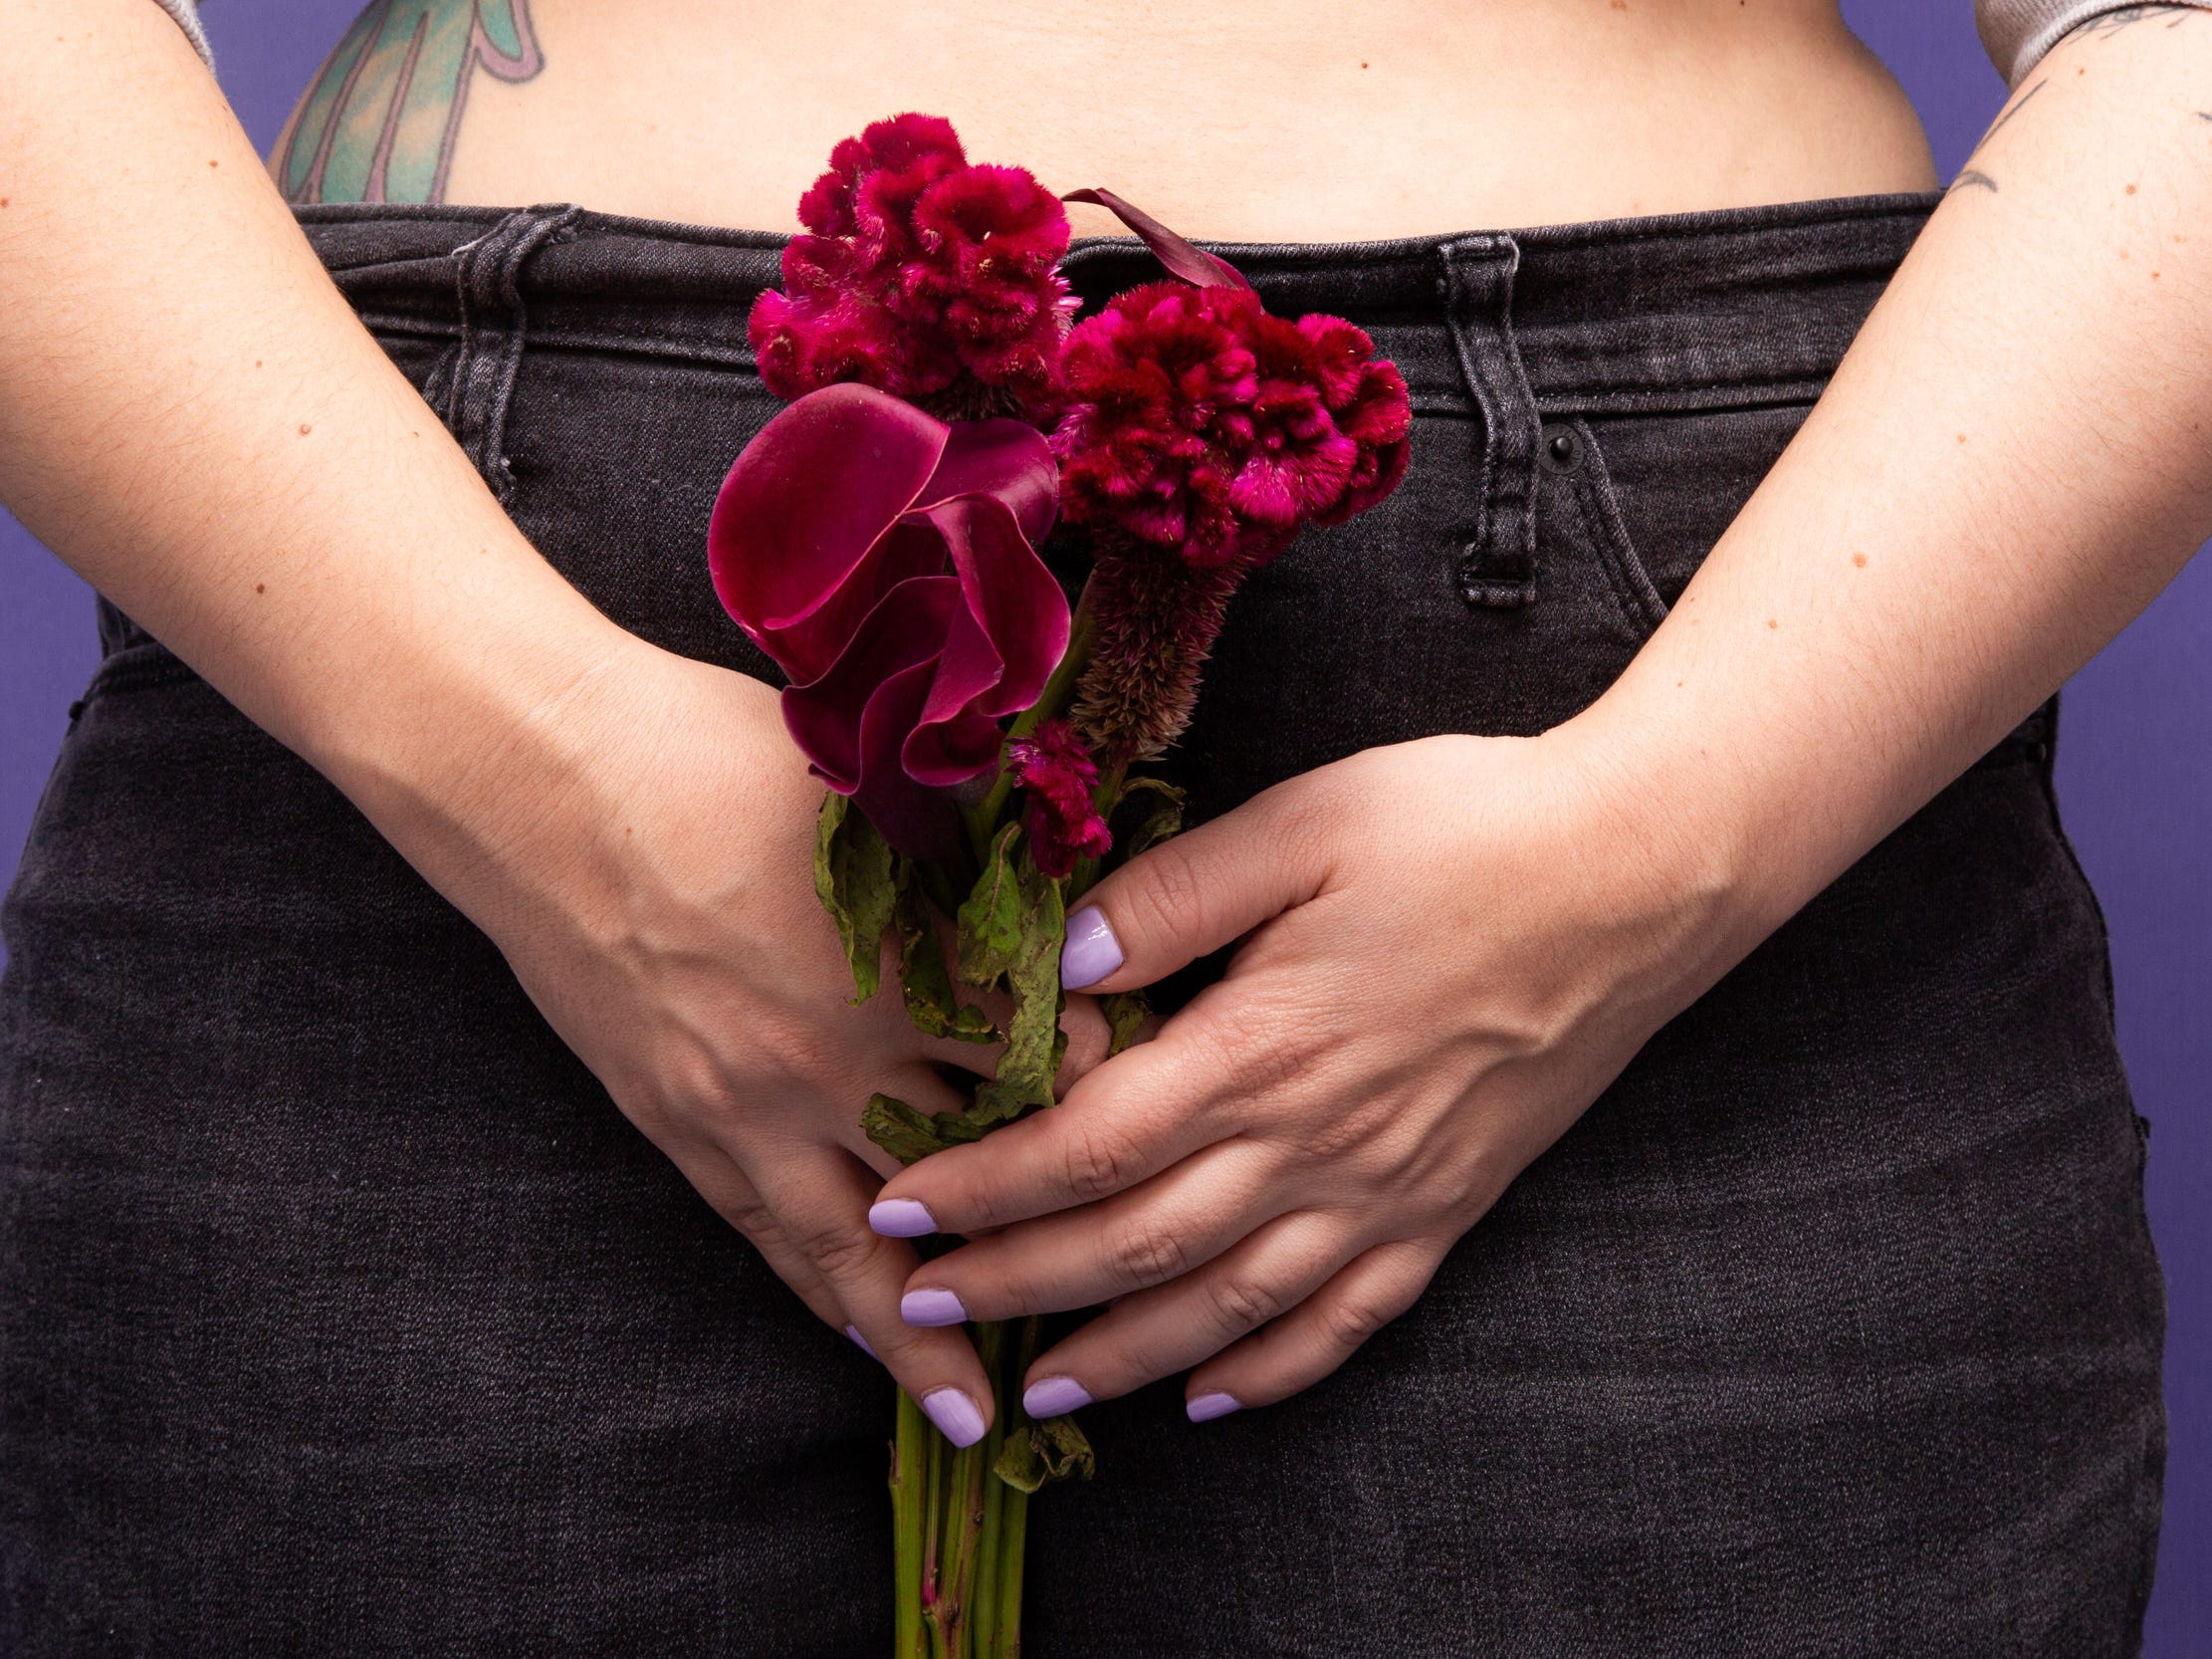 genitals female anatomy sex health flower crotch period underwear